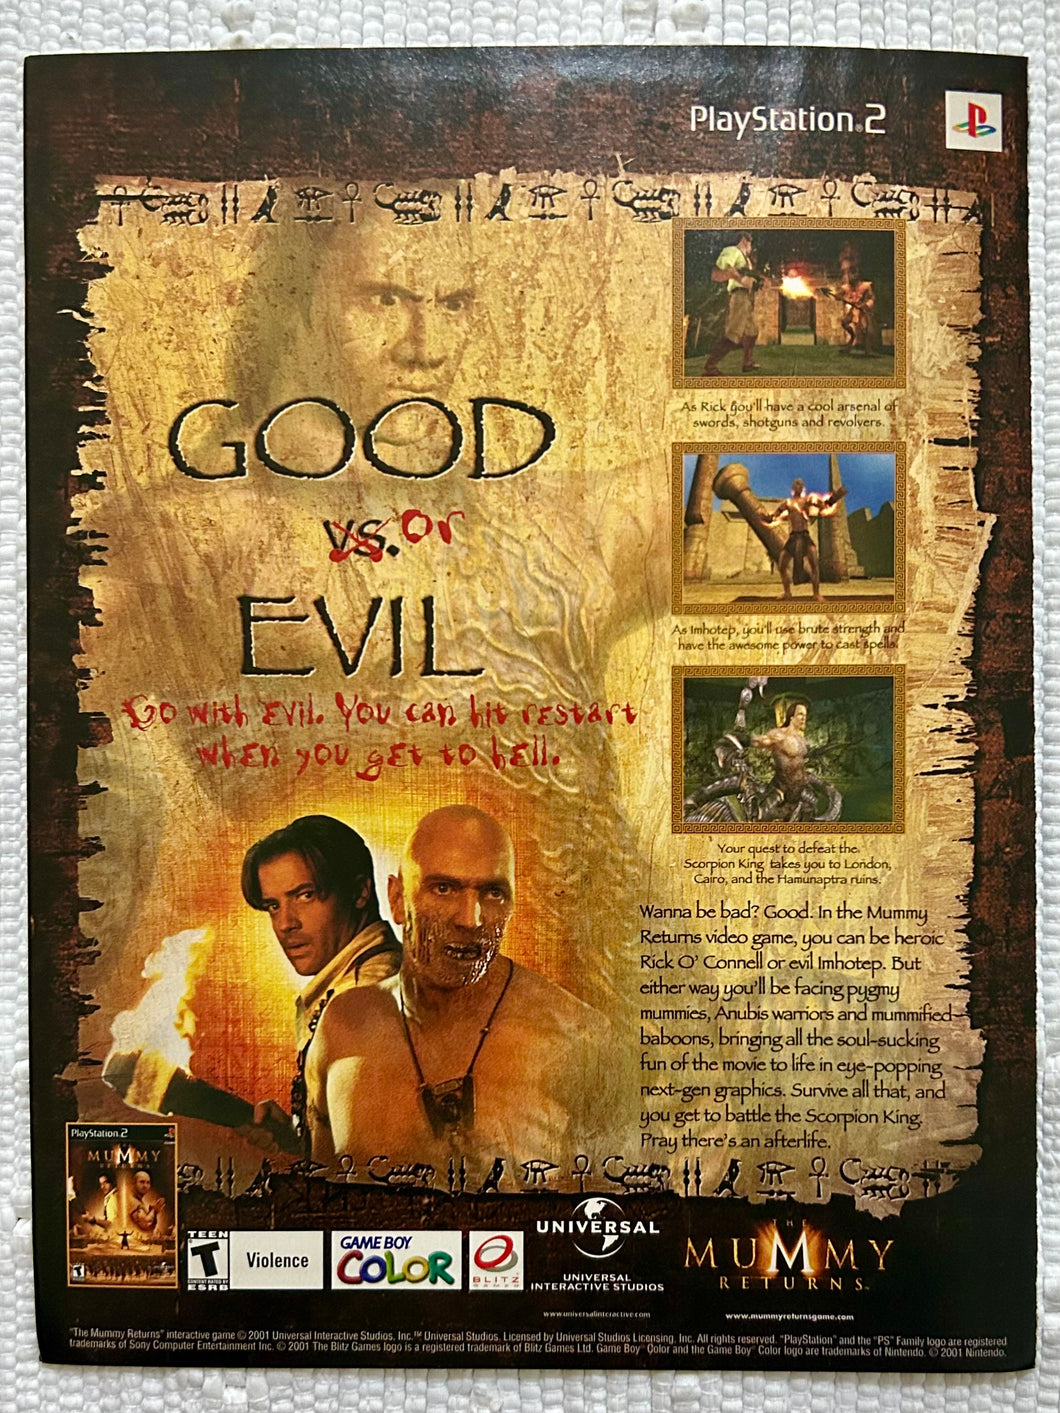 The Mummy Returns - PS2 GBC - Original Vintage Advertisement - Print Ads - Laminated A4 Poster